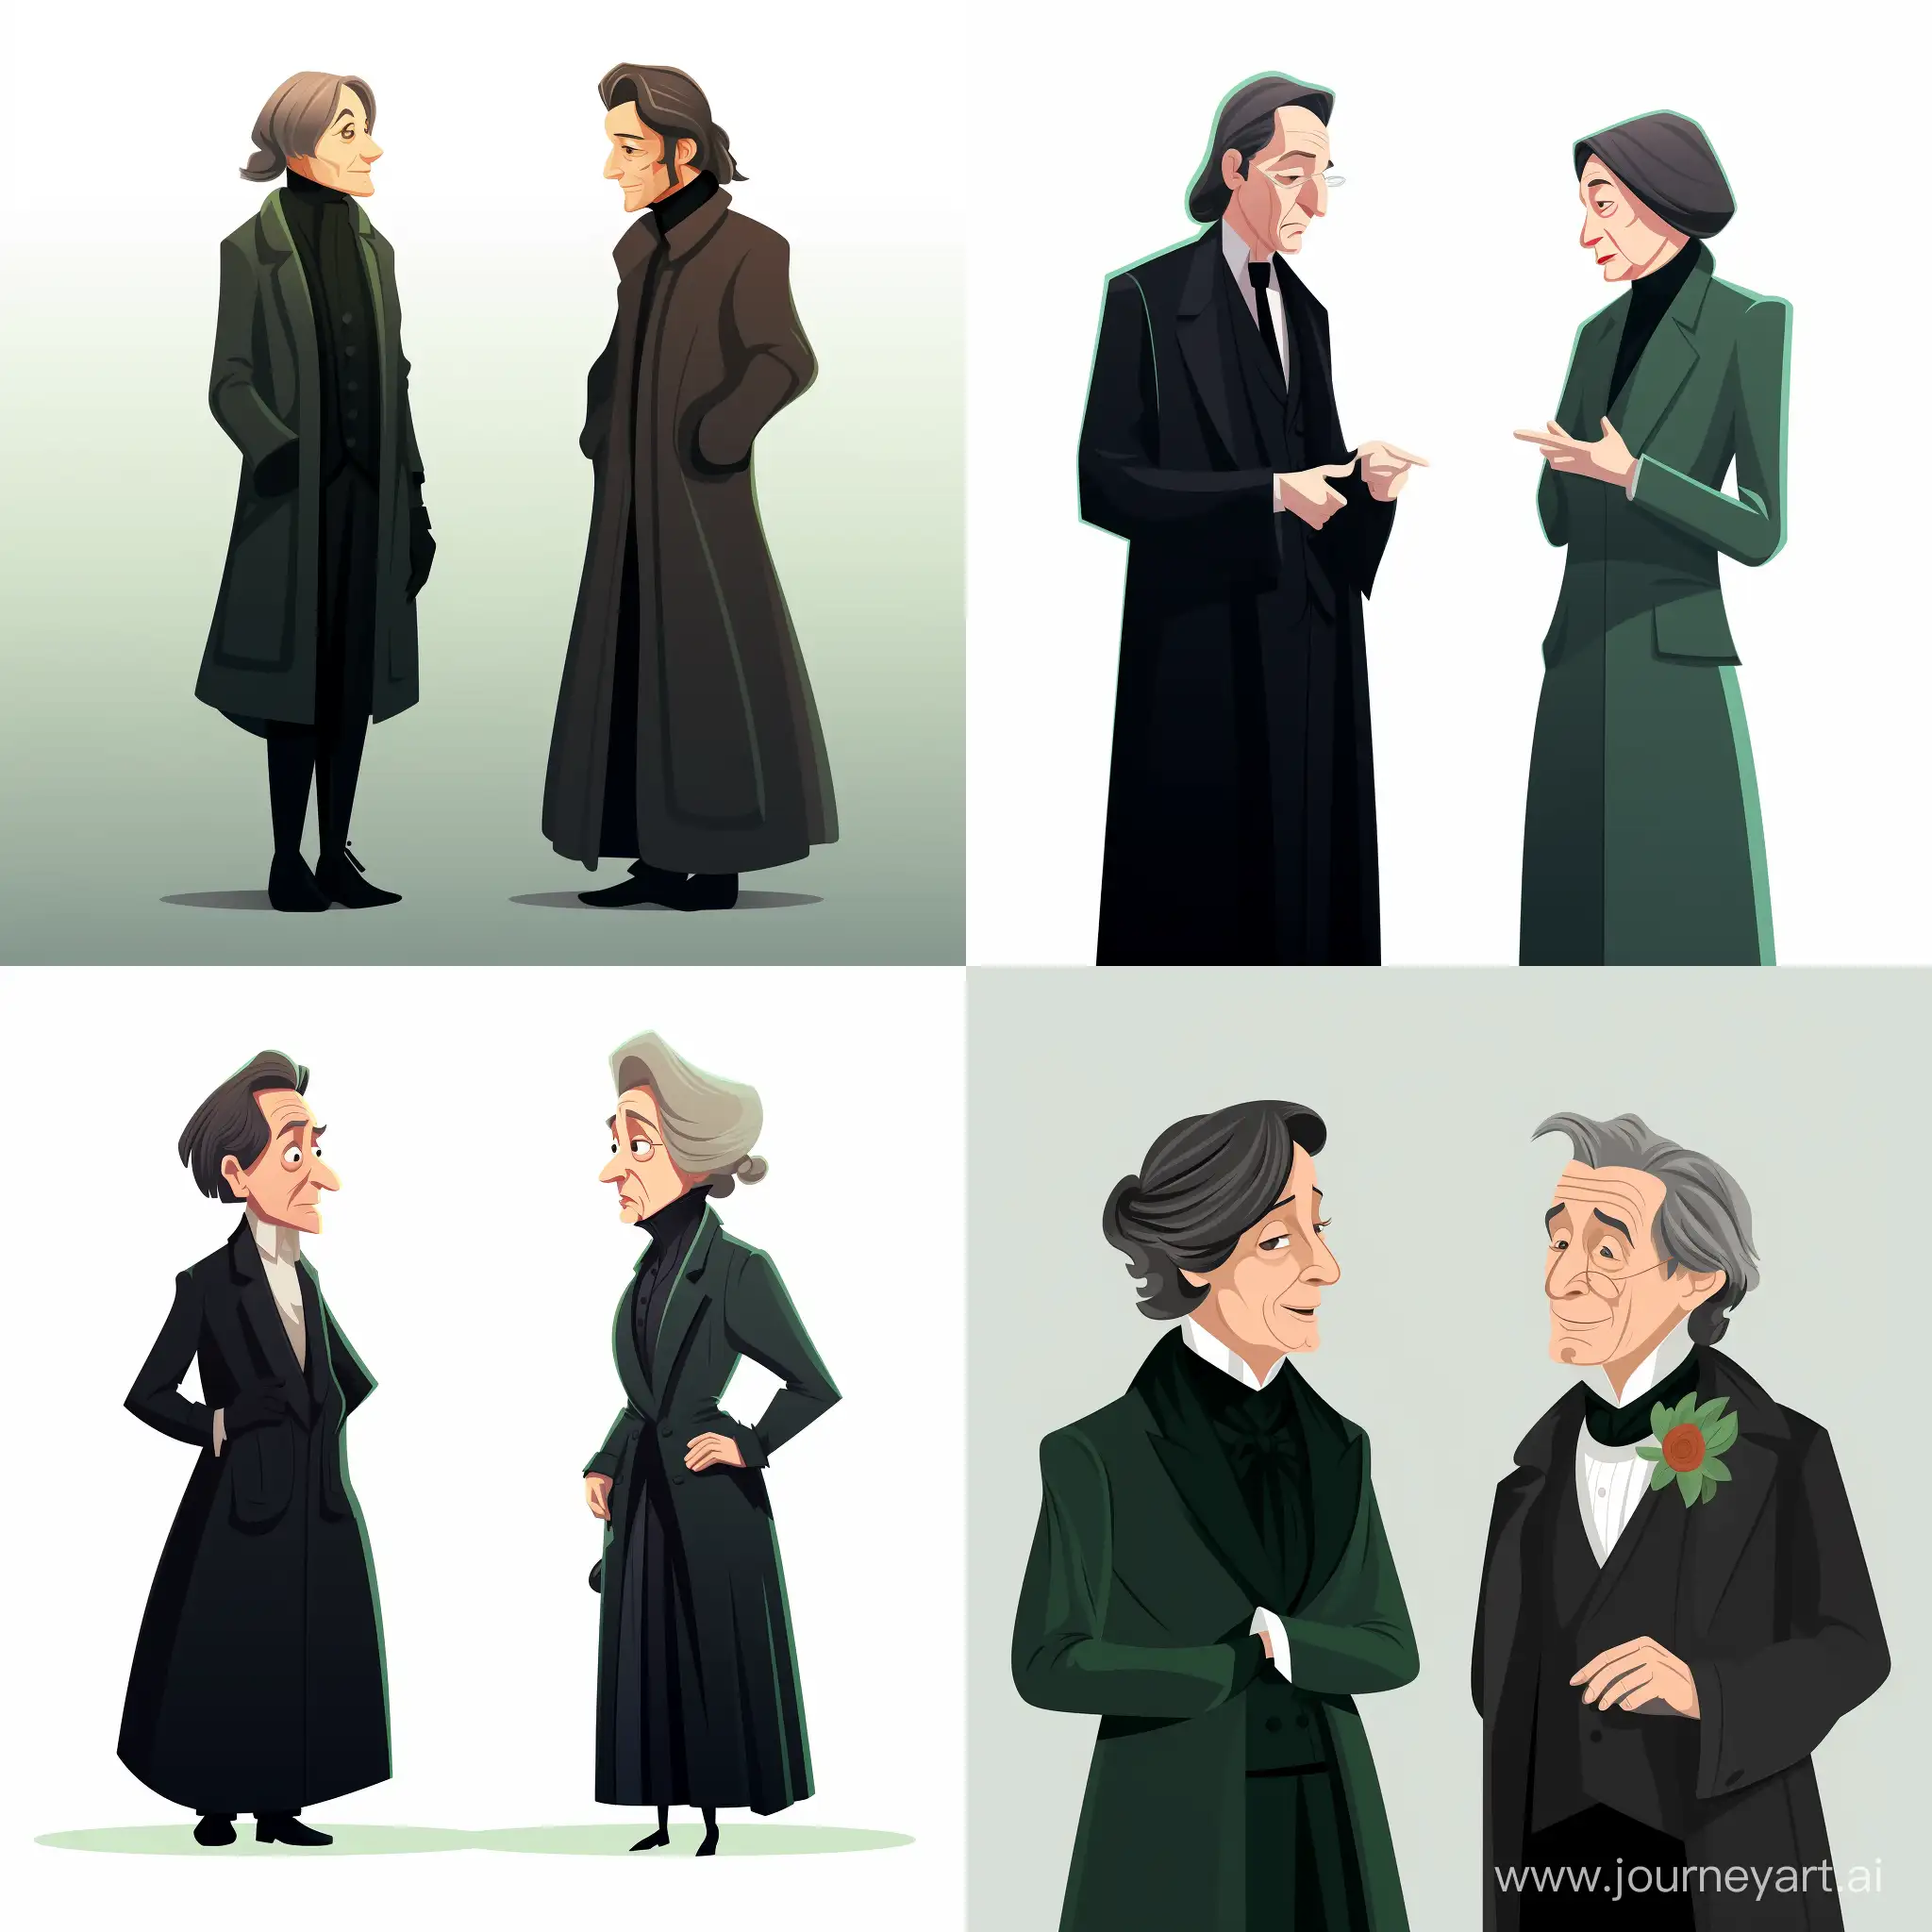 Wizardly-Conversation-Professor-McGonagall-and-Severus-Snape-in-Cartoon-Style